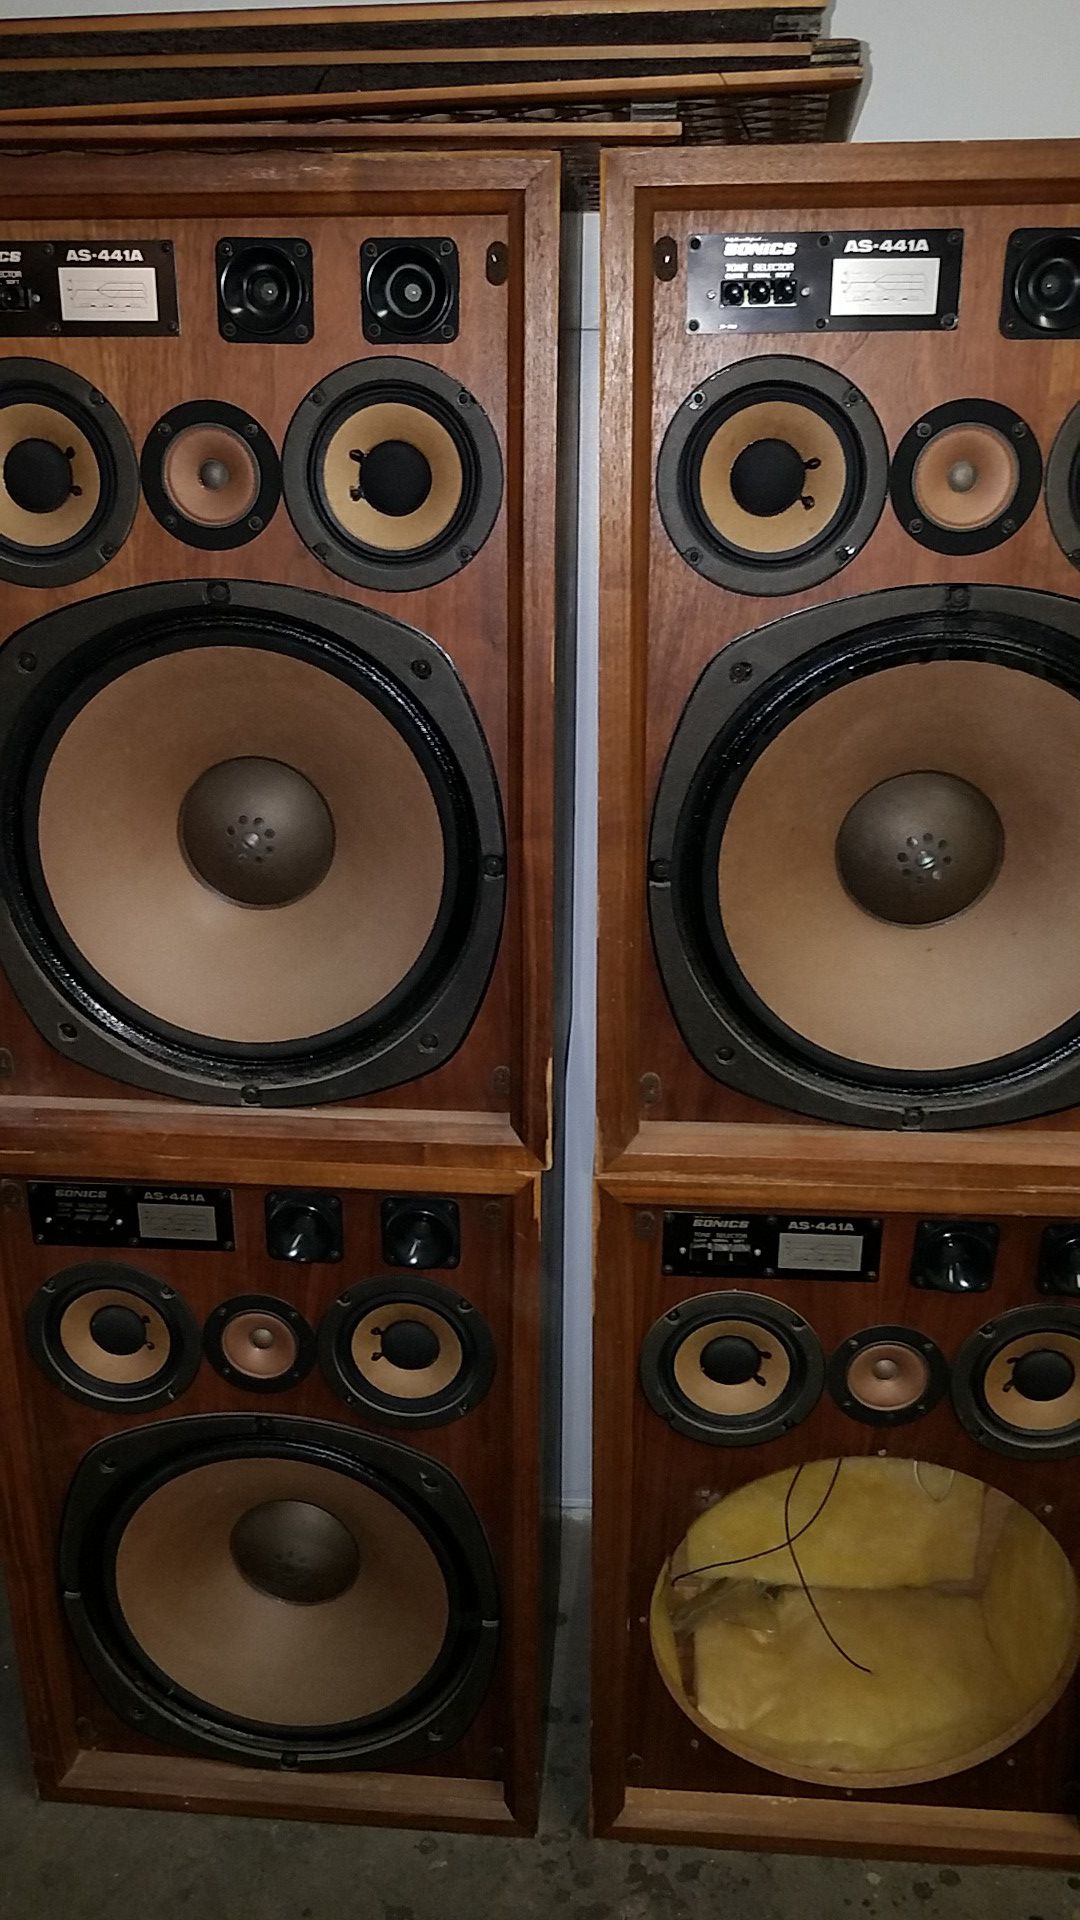 Vintage Sonics as-441A x4 speakers made by pioneer